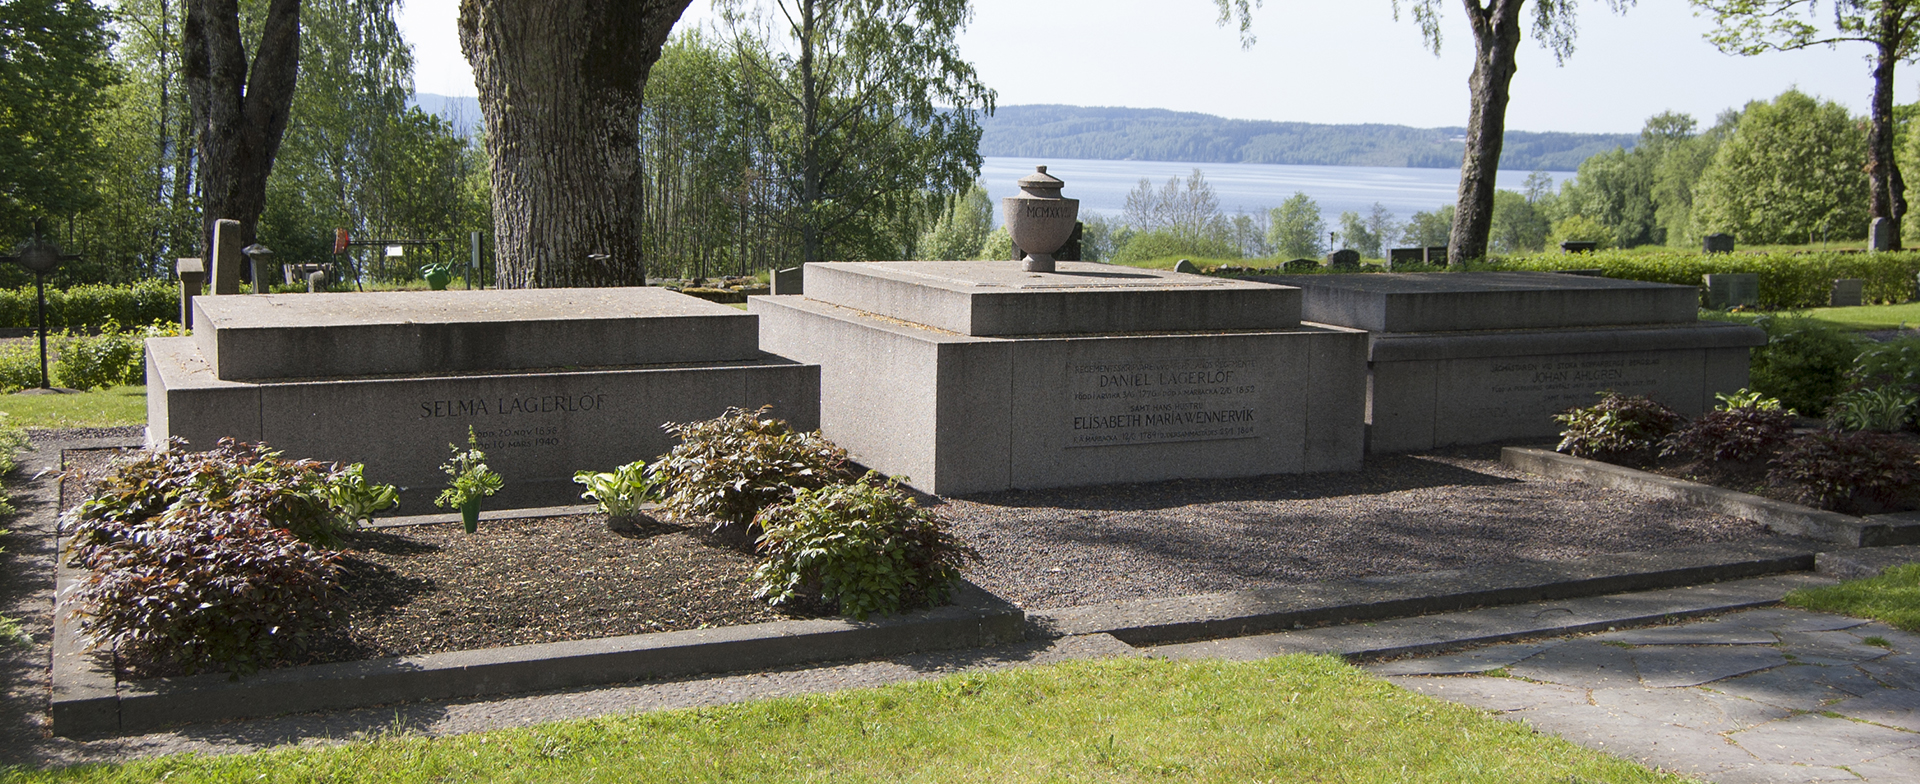 Den Lagerlöfska familjegraven